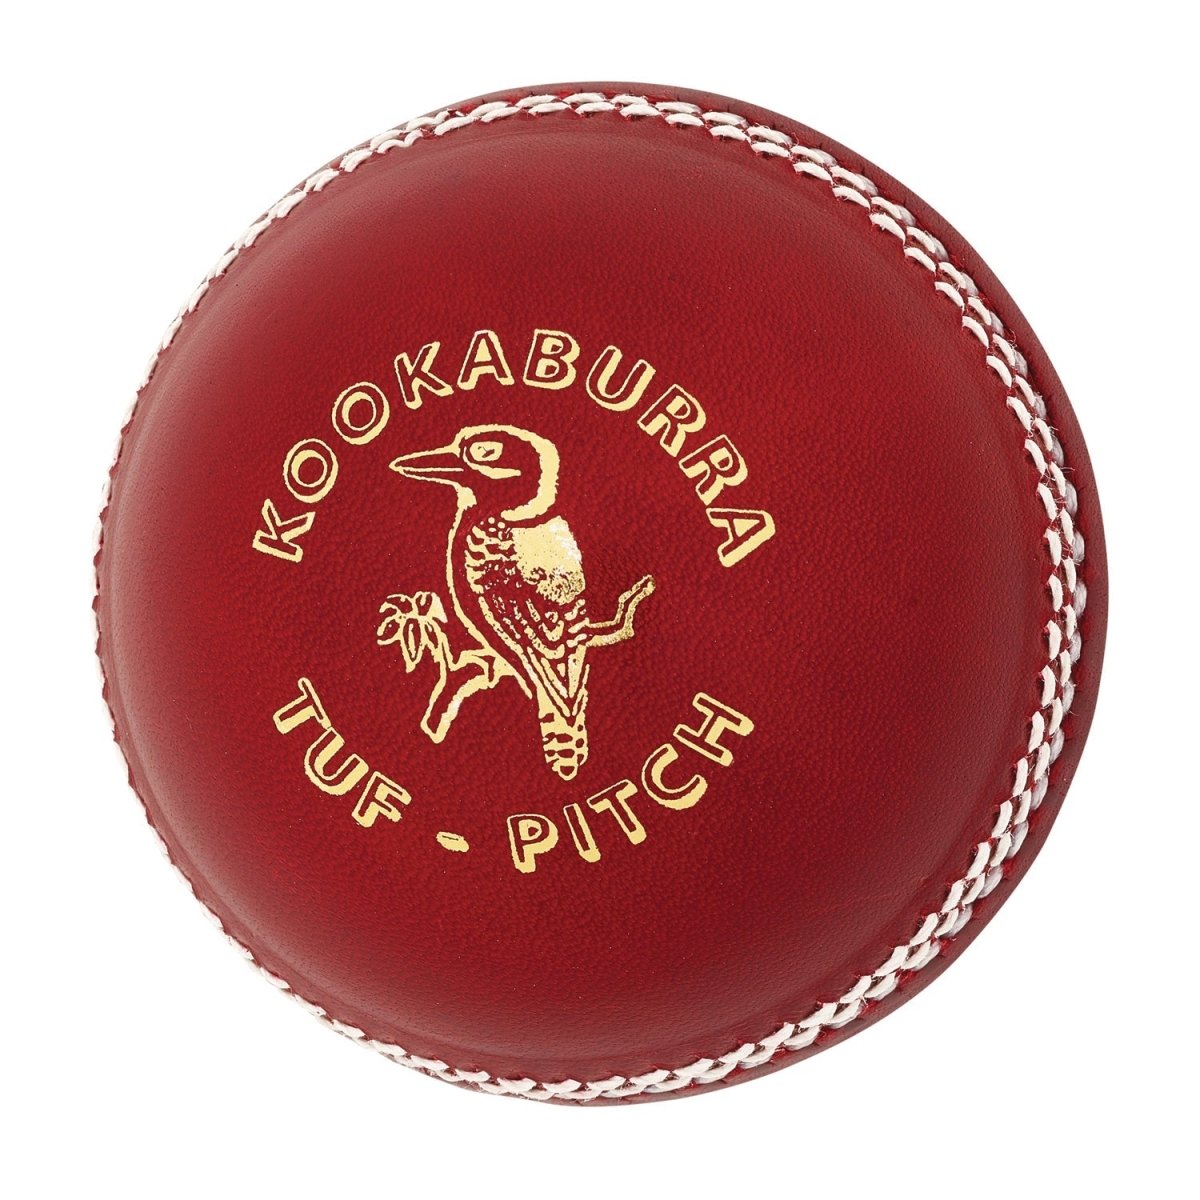 Kookaburra Tuf Pitch Cricket Ball Pack of 12